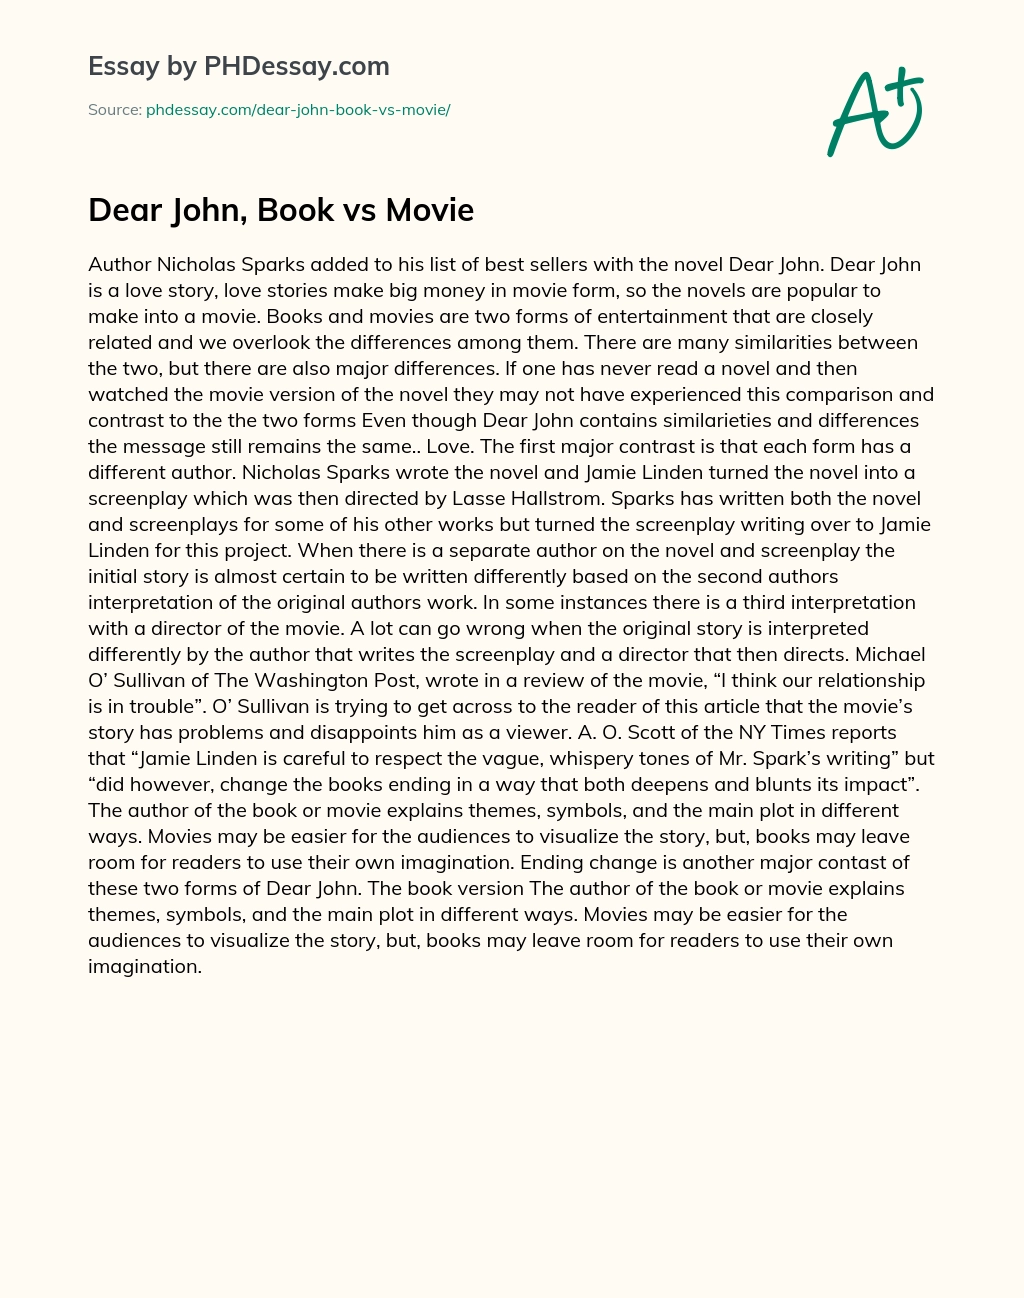 Dear John, Book vs Movie essay